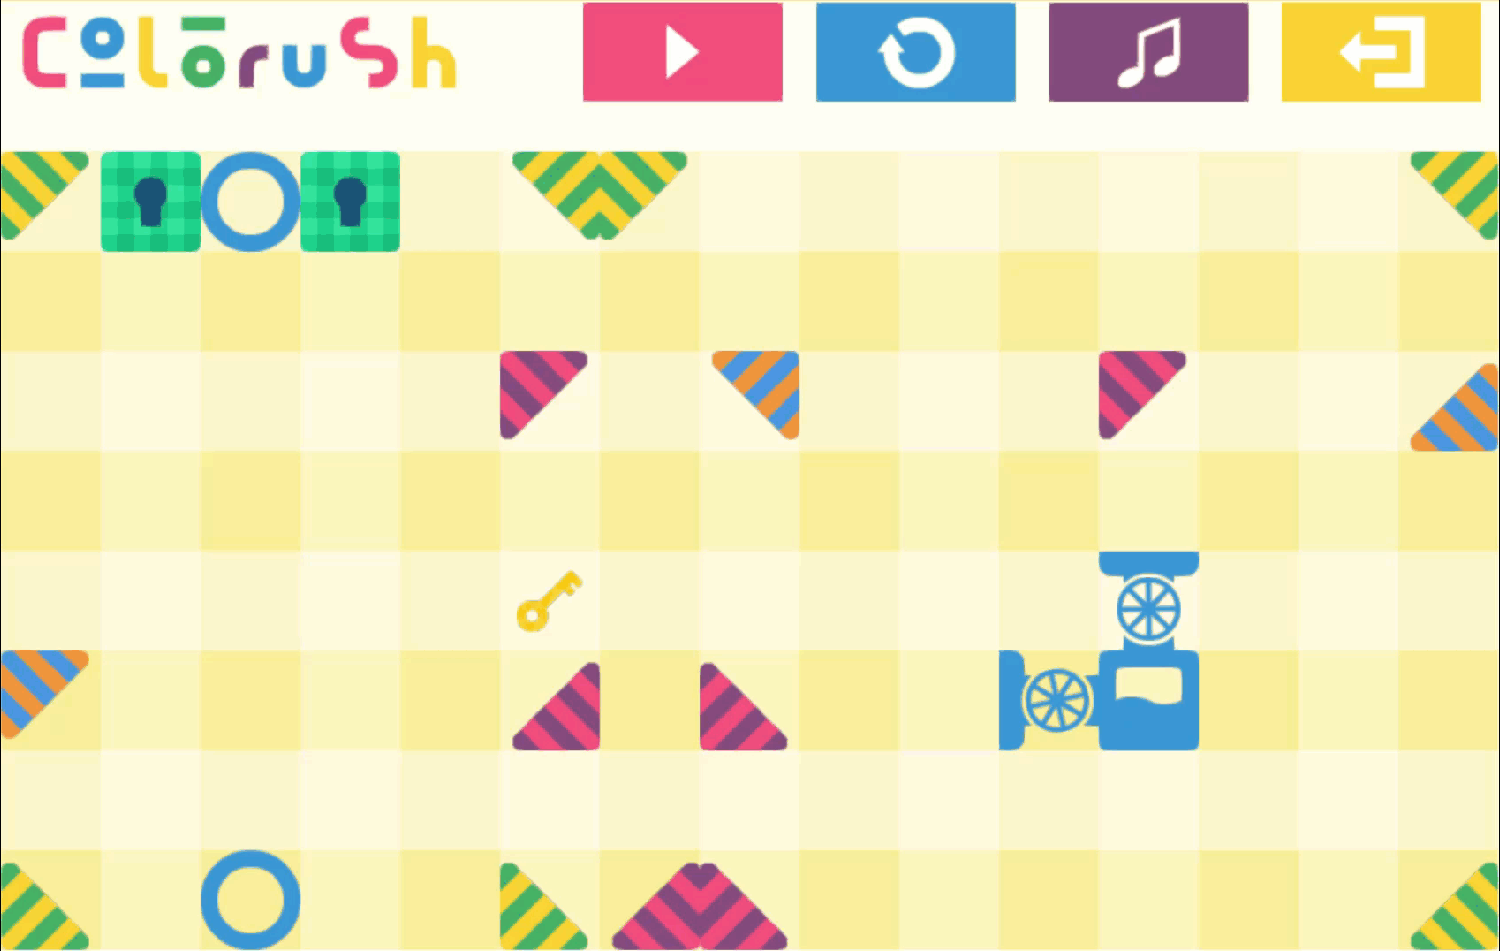 Colorush Game Level 16 Screenshot.